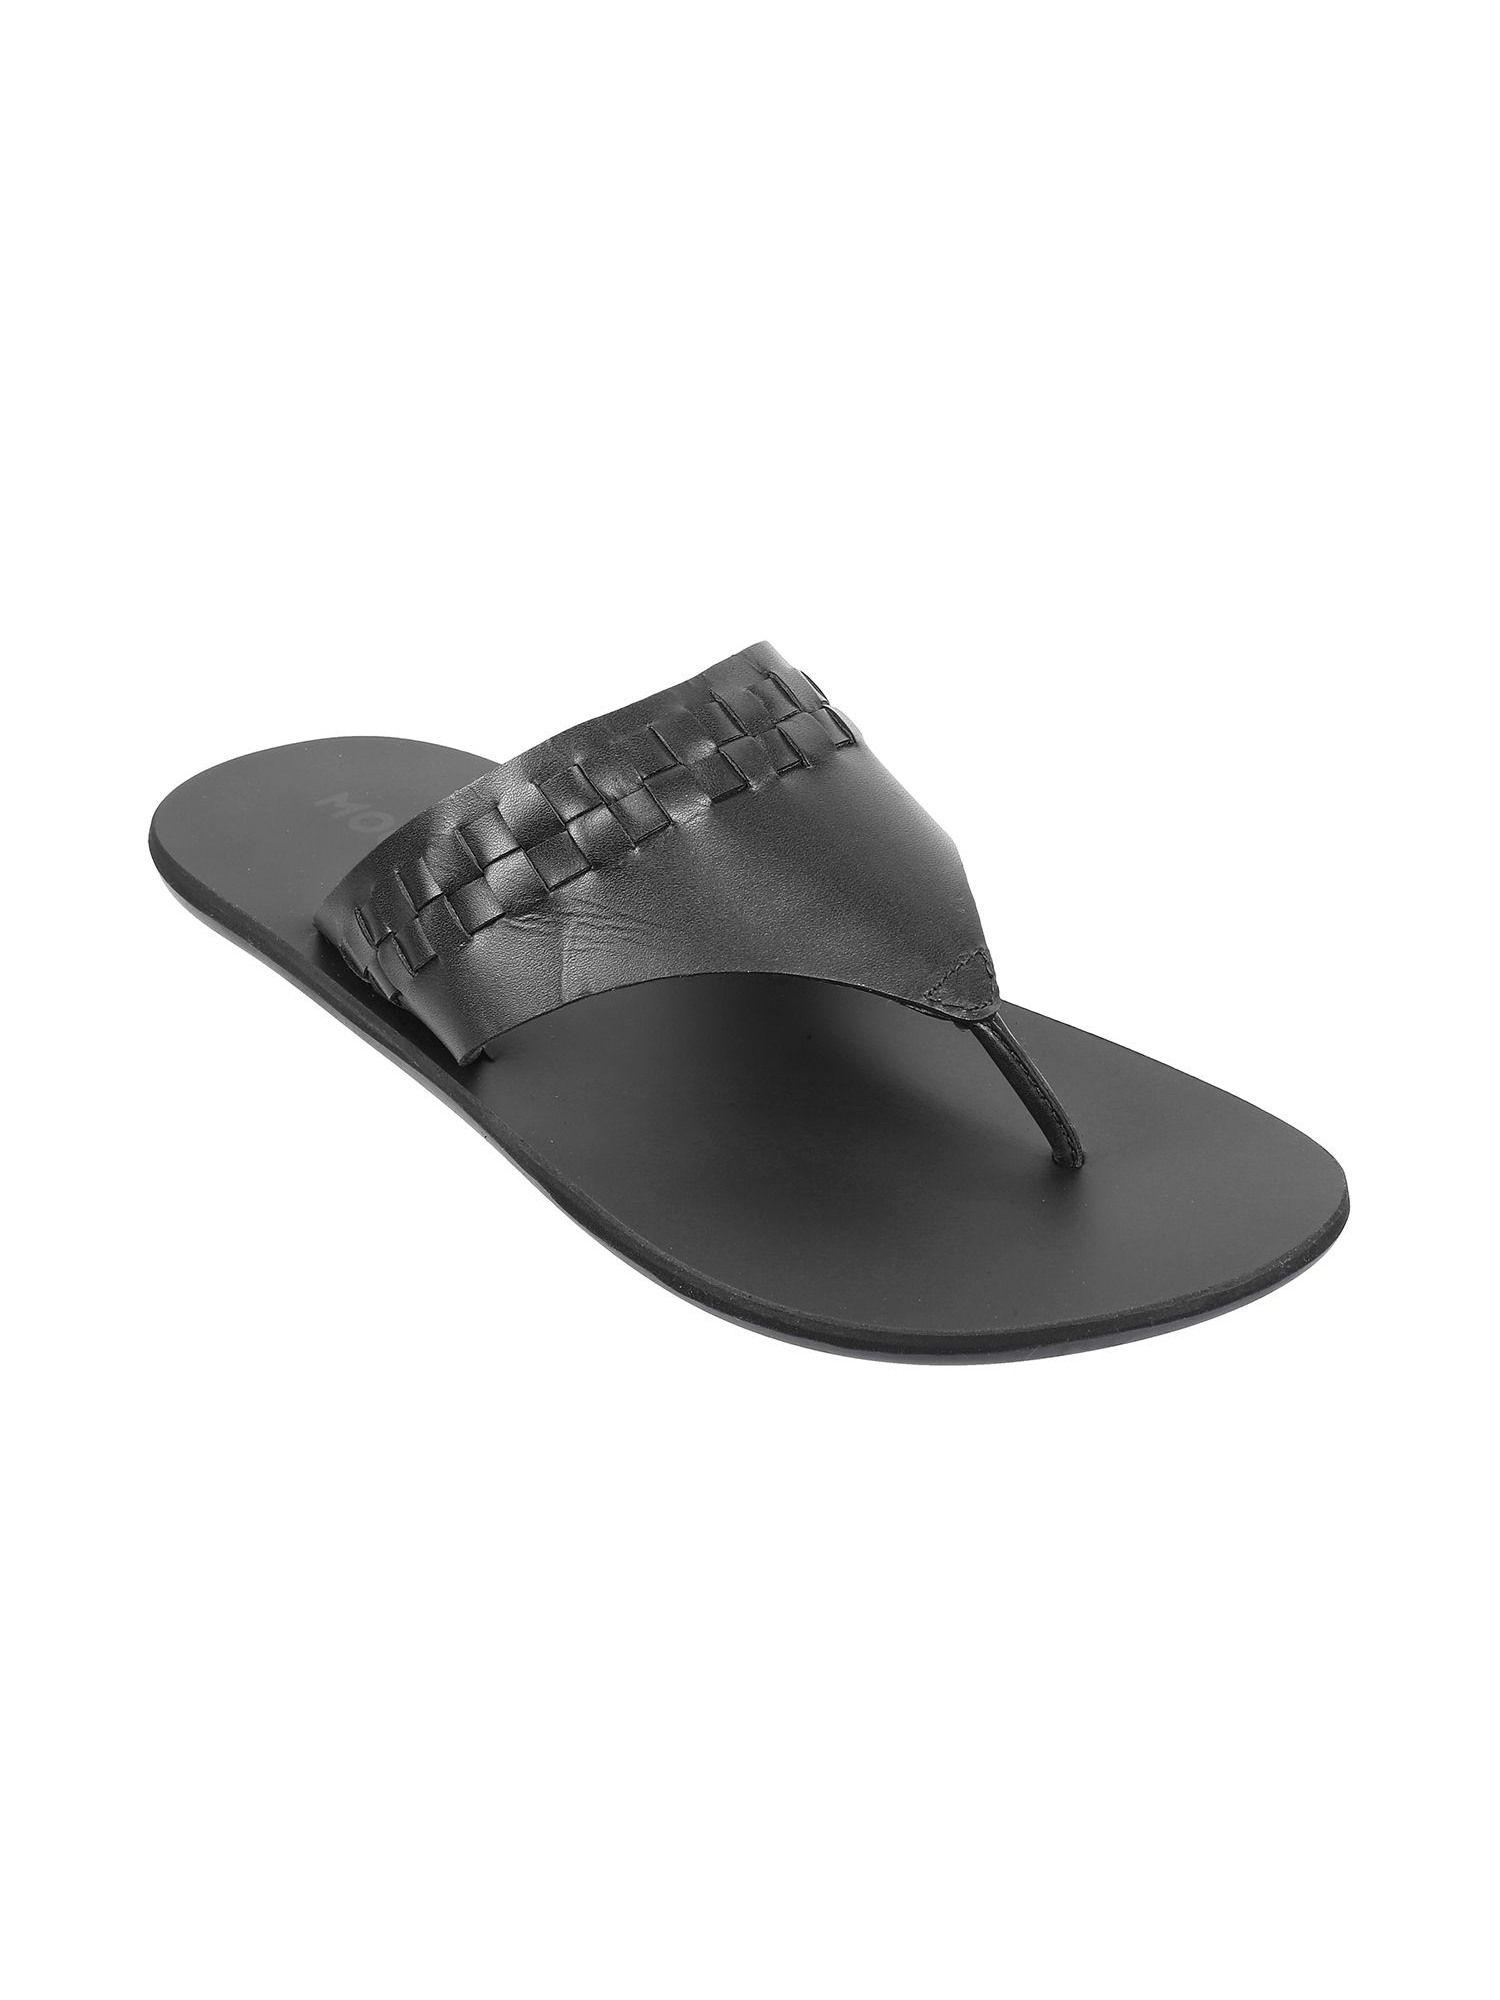 men-leather-black-slippers